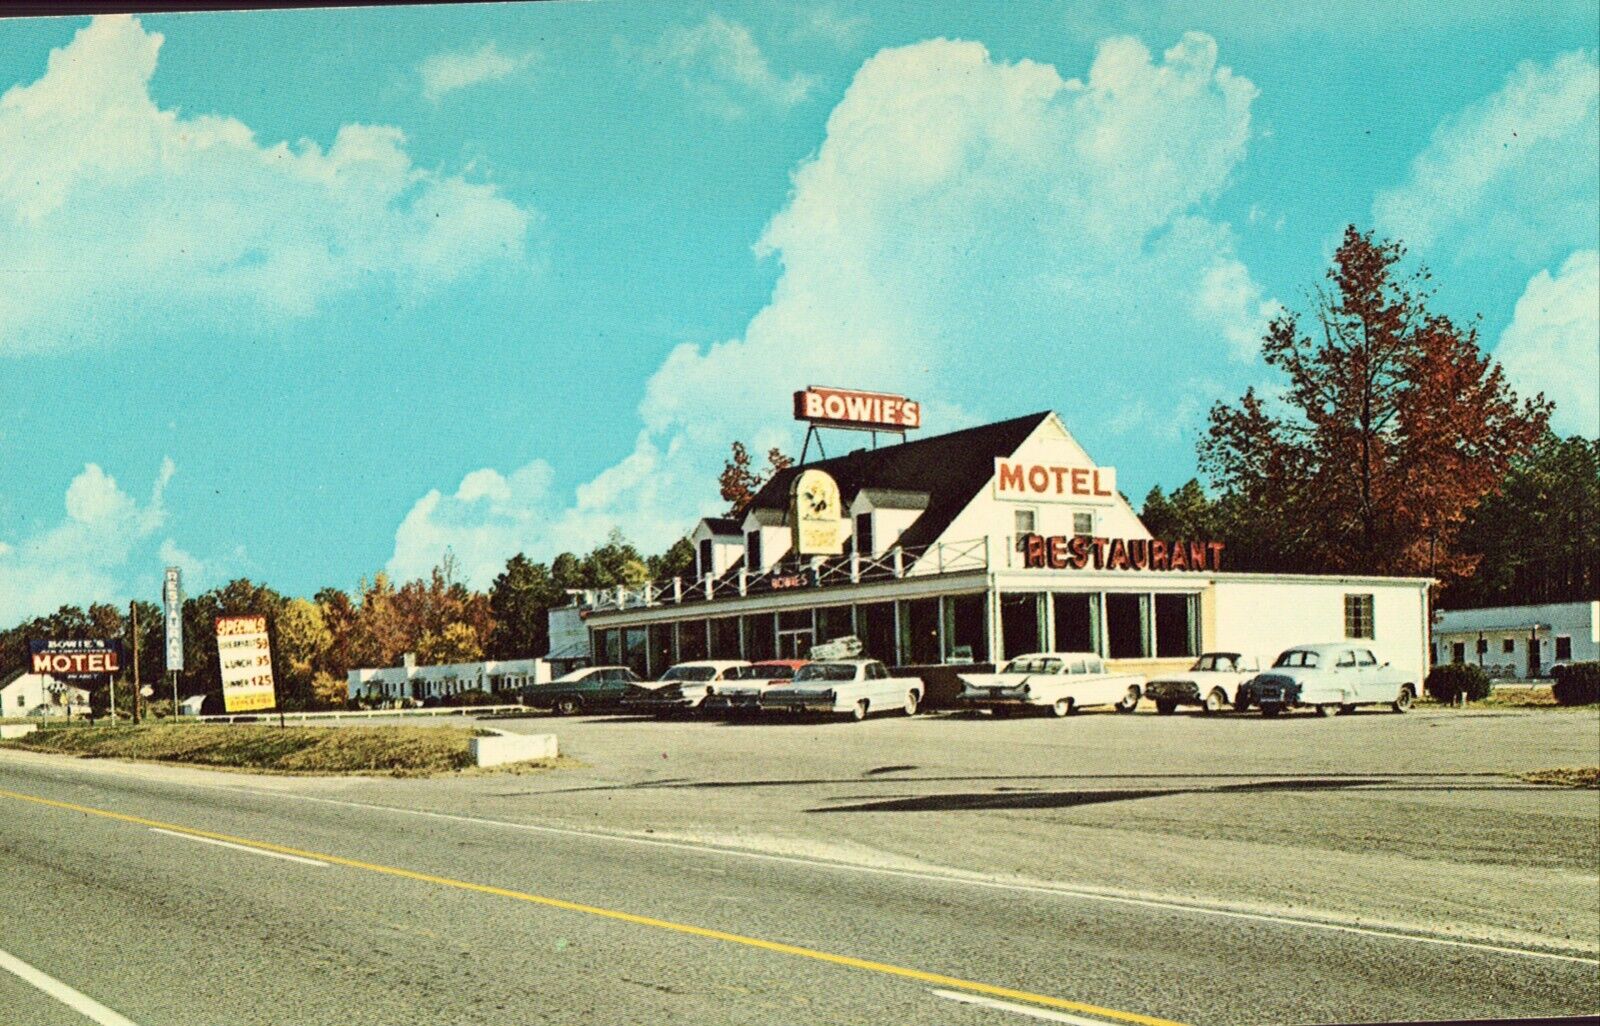 Bowie's Motel & Restaurant - Lorne, Virginia - Vintage Postcard Old Cars